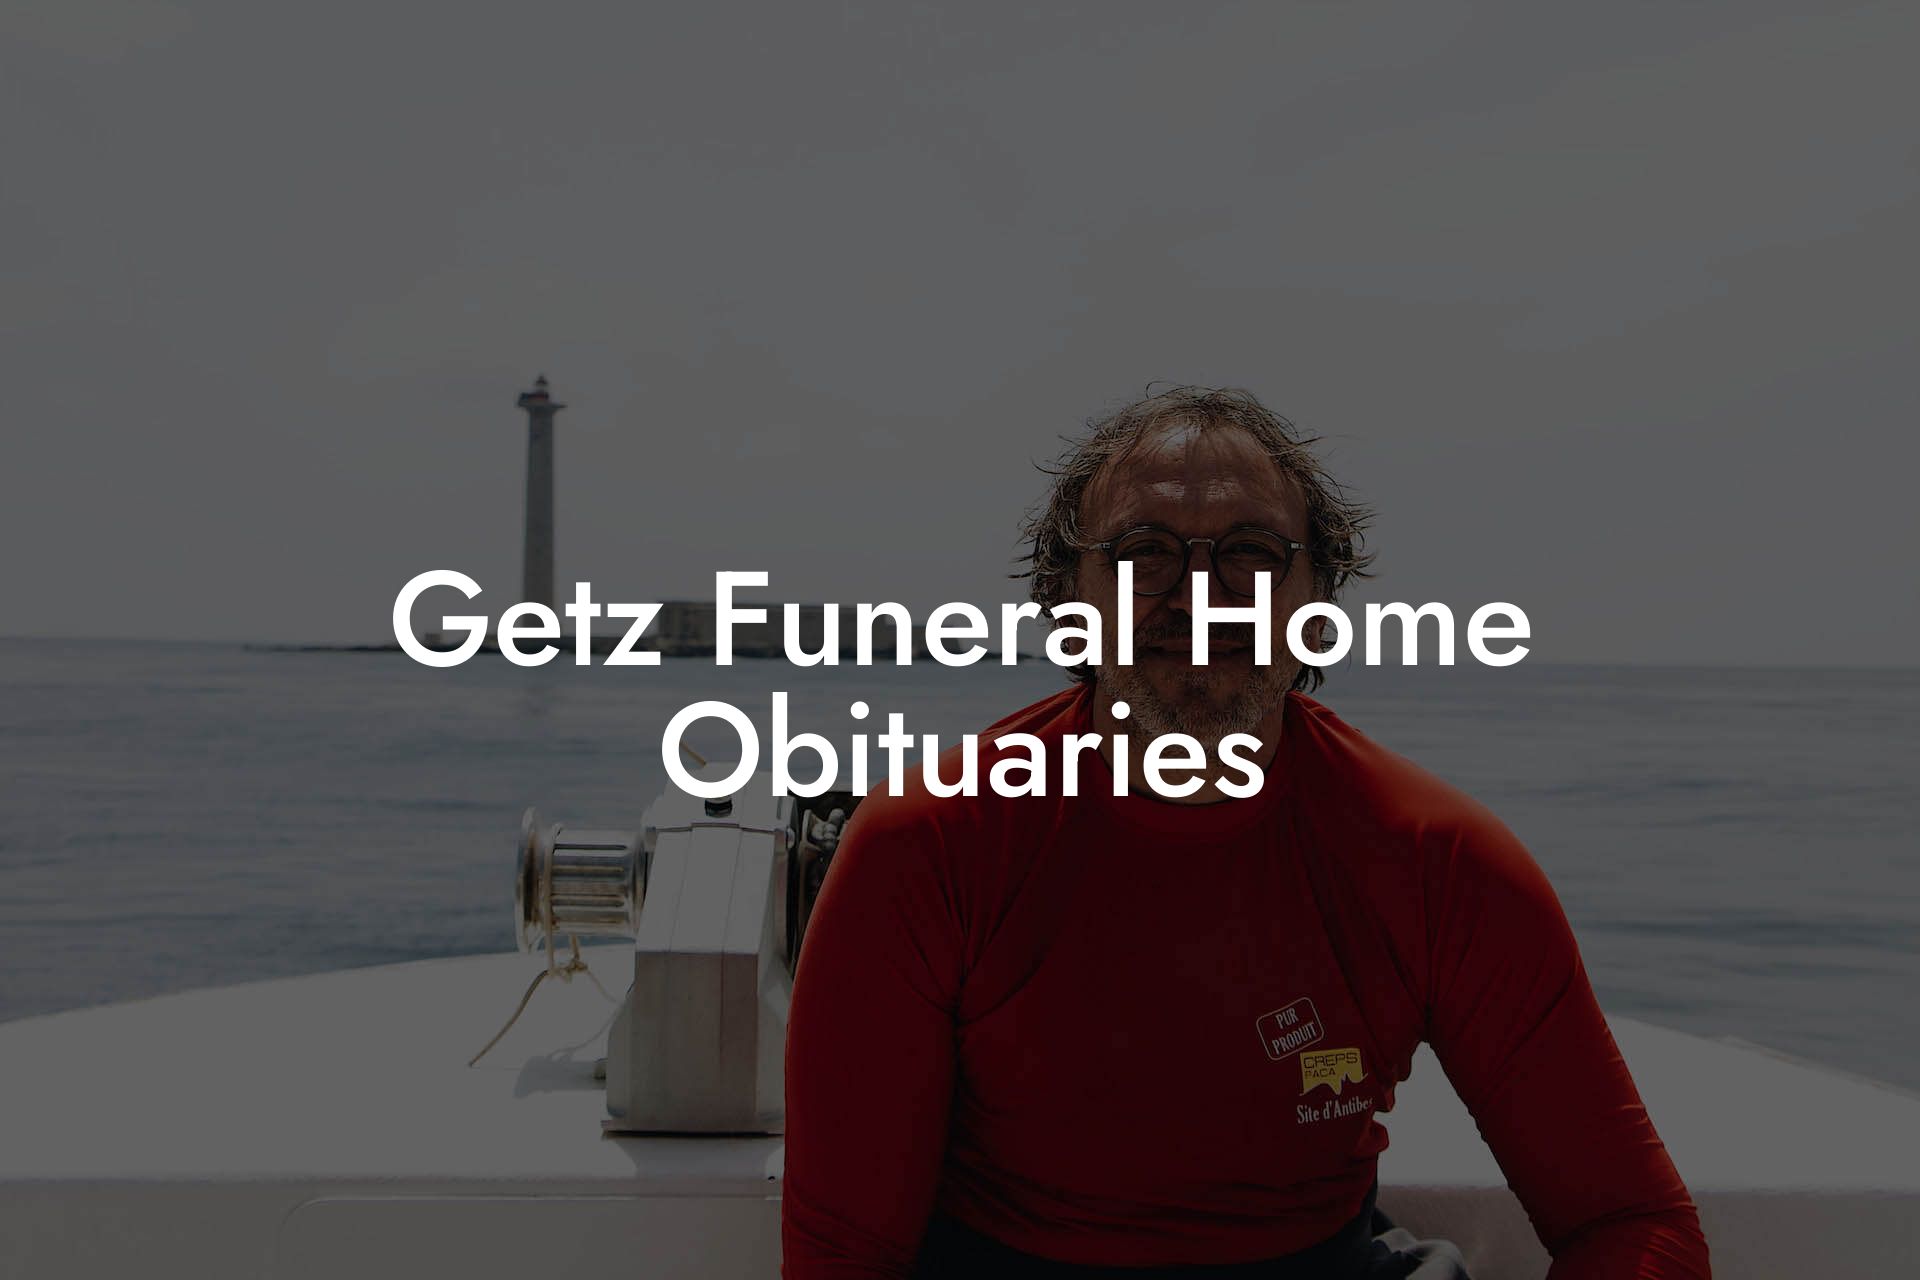 Getz Funeral Home Obituaries